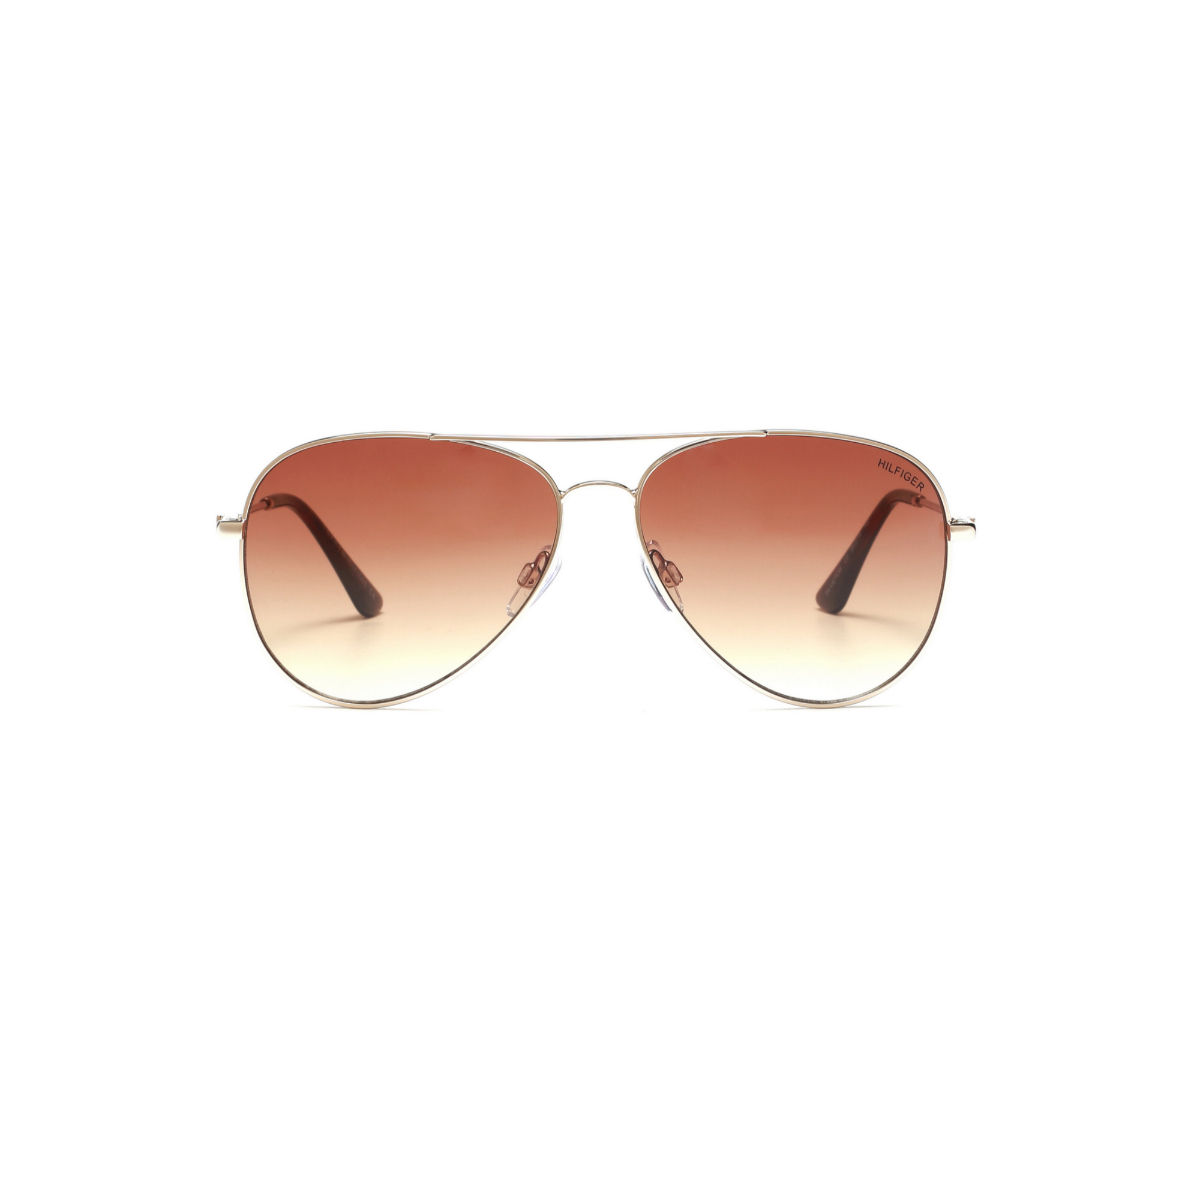 TOMMY HILFIGER sunglasses online shop - Free Delivery